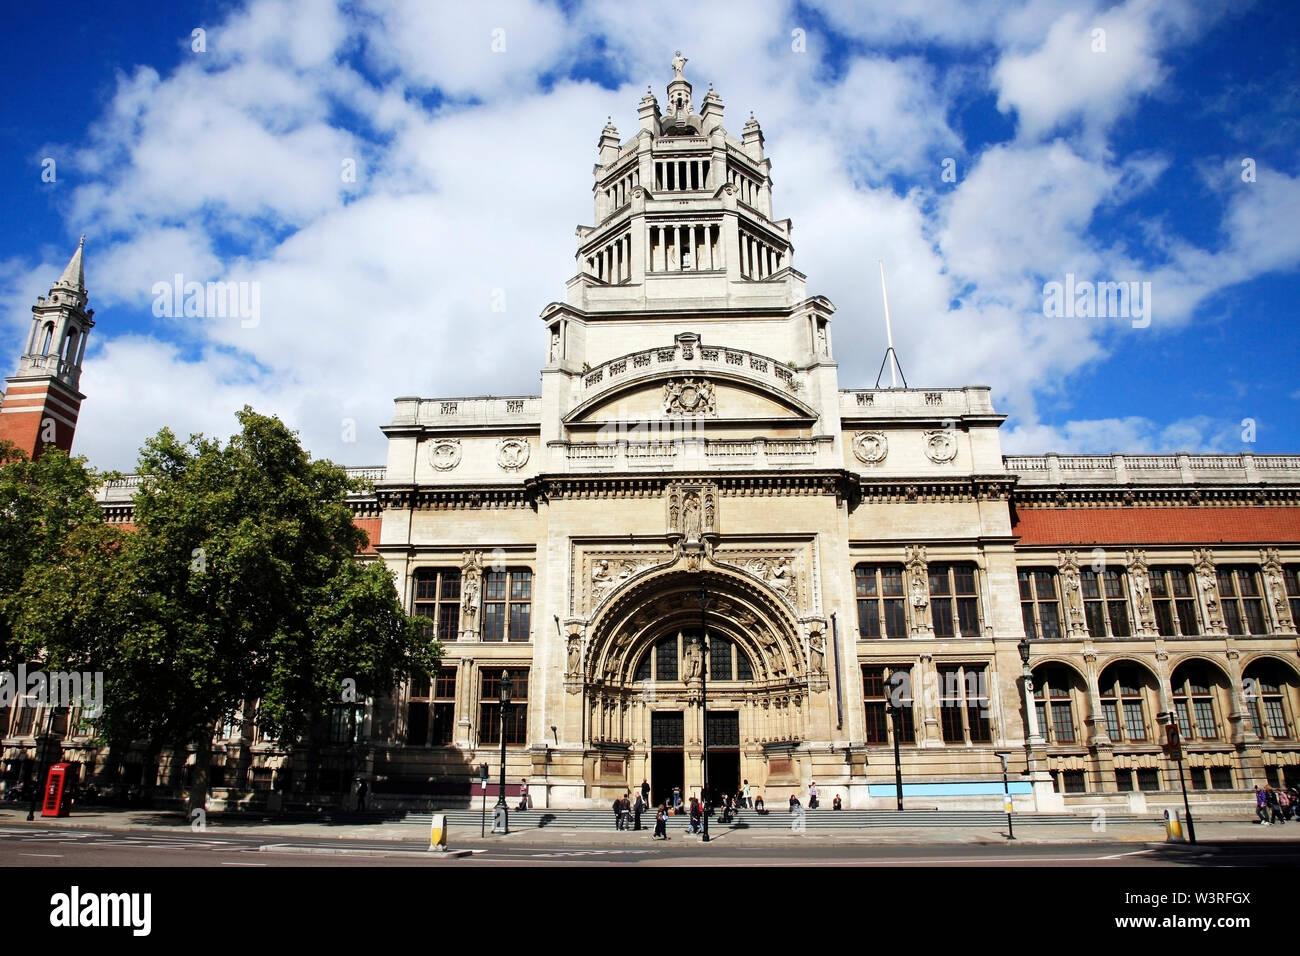 Victoria and Albert Museum Exterior, Kensington, London Editorial Image -  Image of capital, clear: 191770650